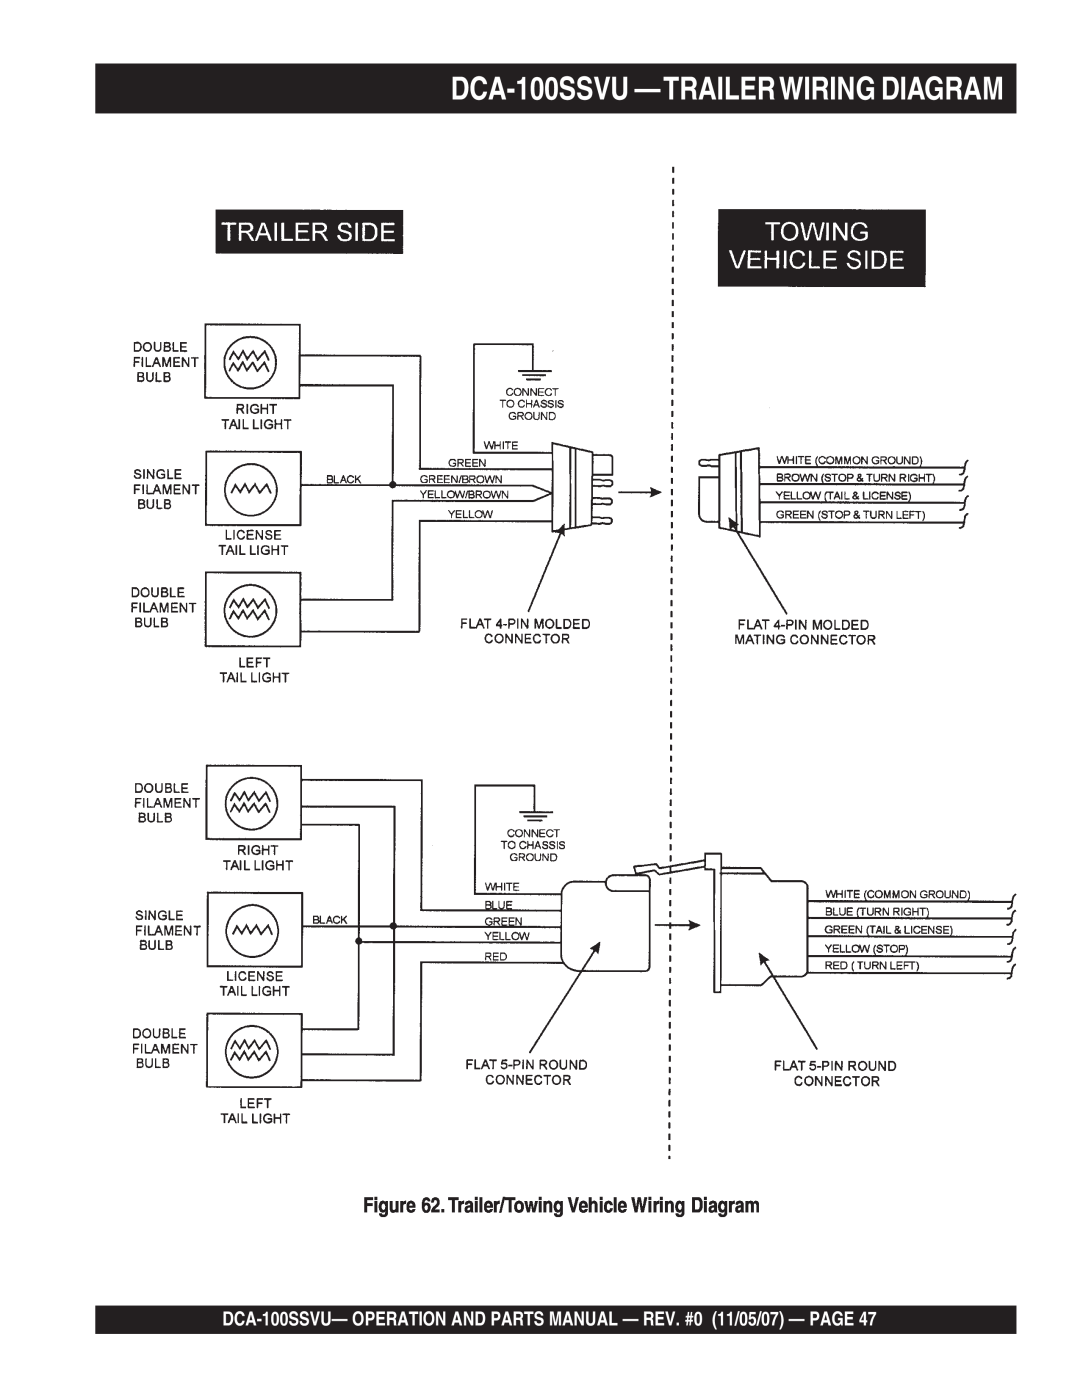 Multiquip operation manual DCA-100SSVU —TRAILERWIRINGDIAGRAM, Trailer/Towing Vehicle Wiring Diagram 